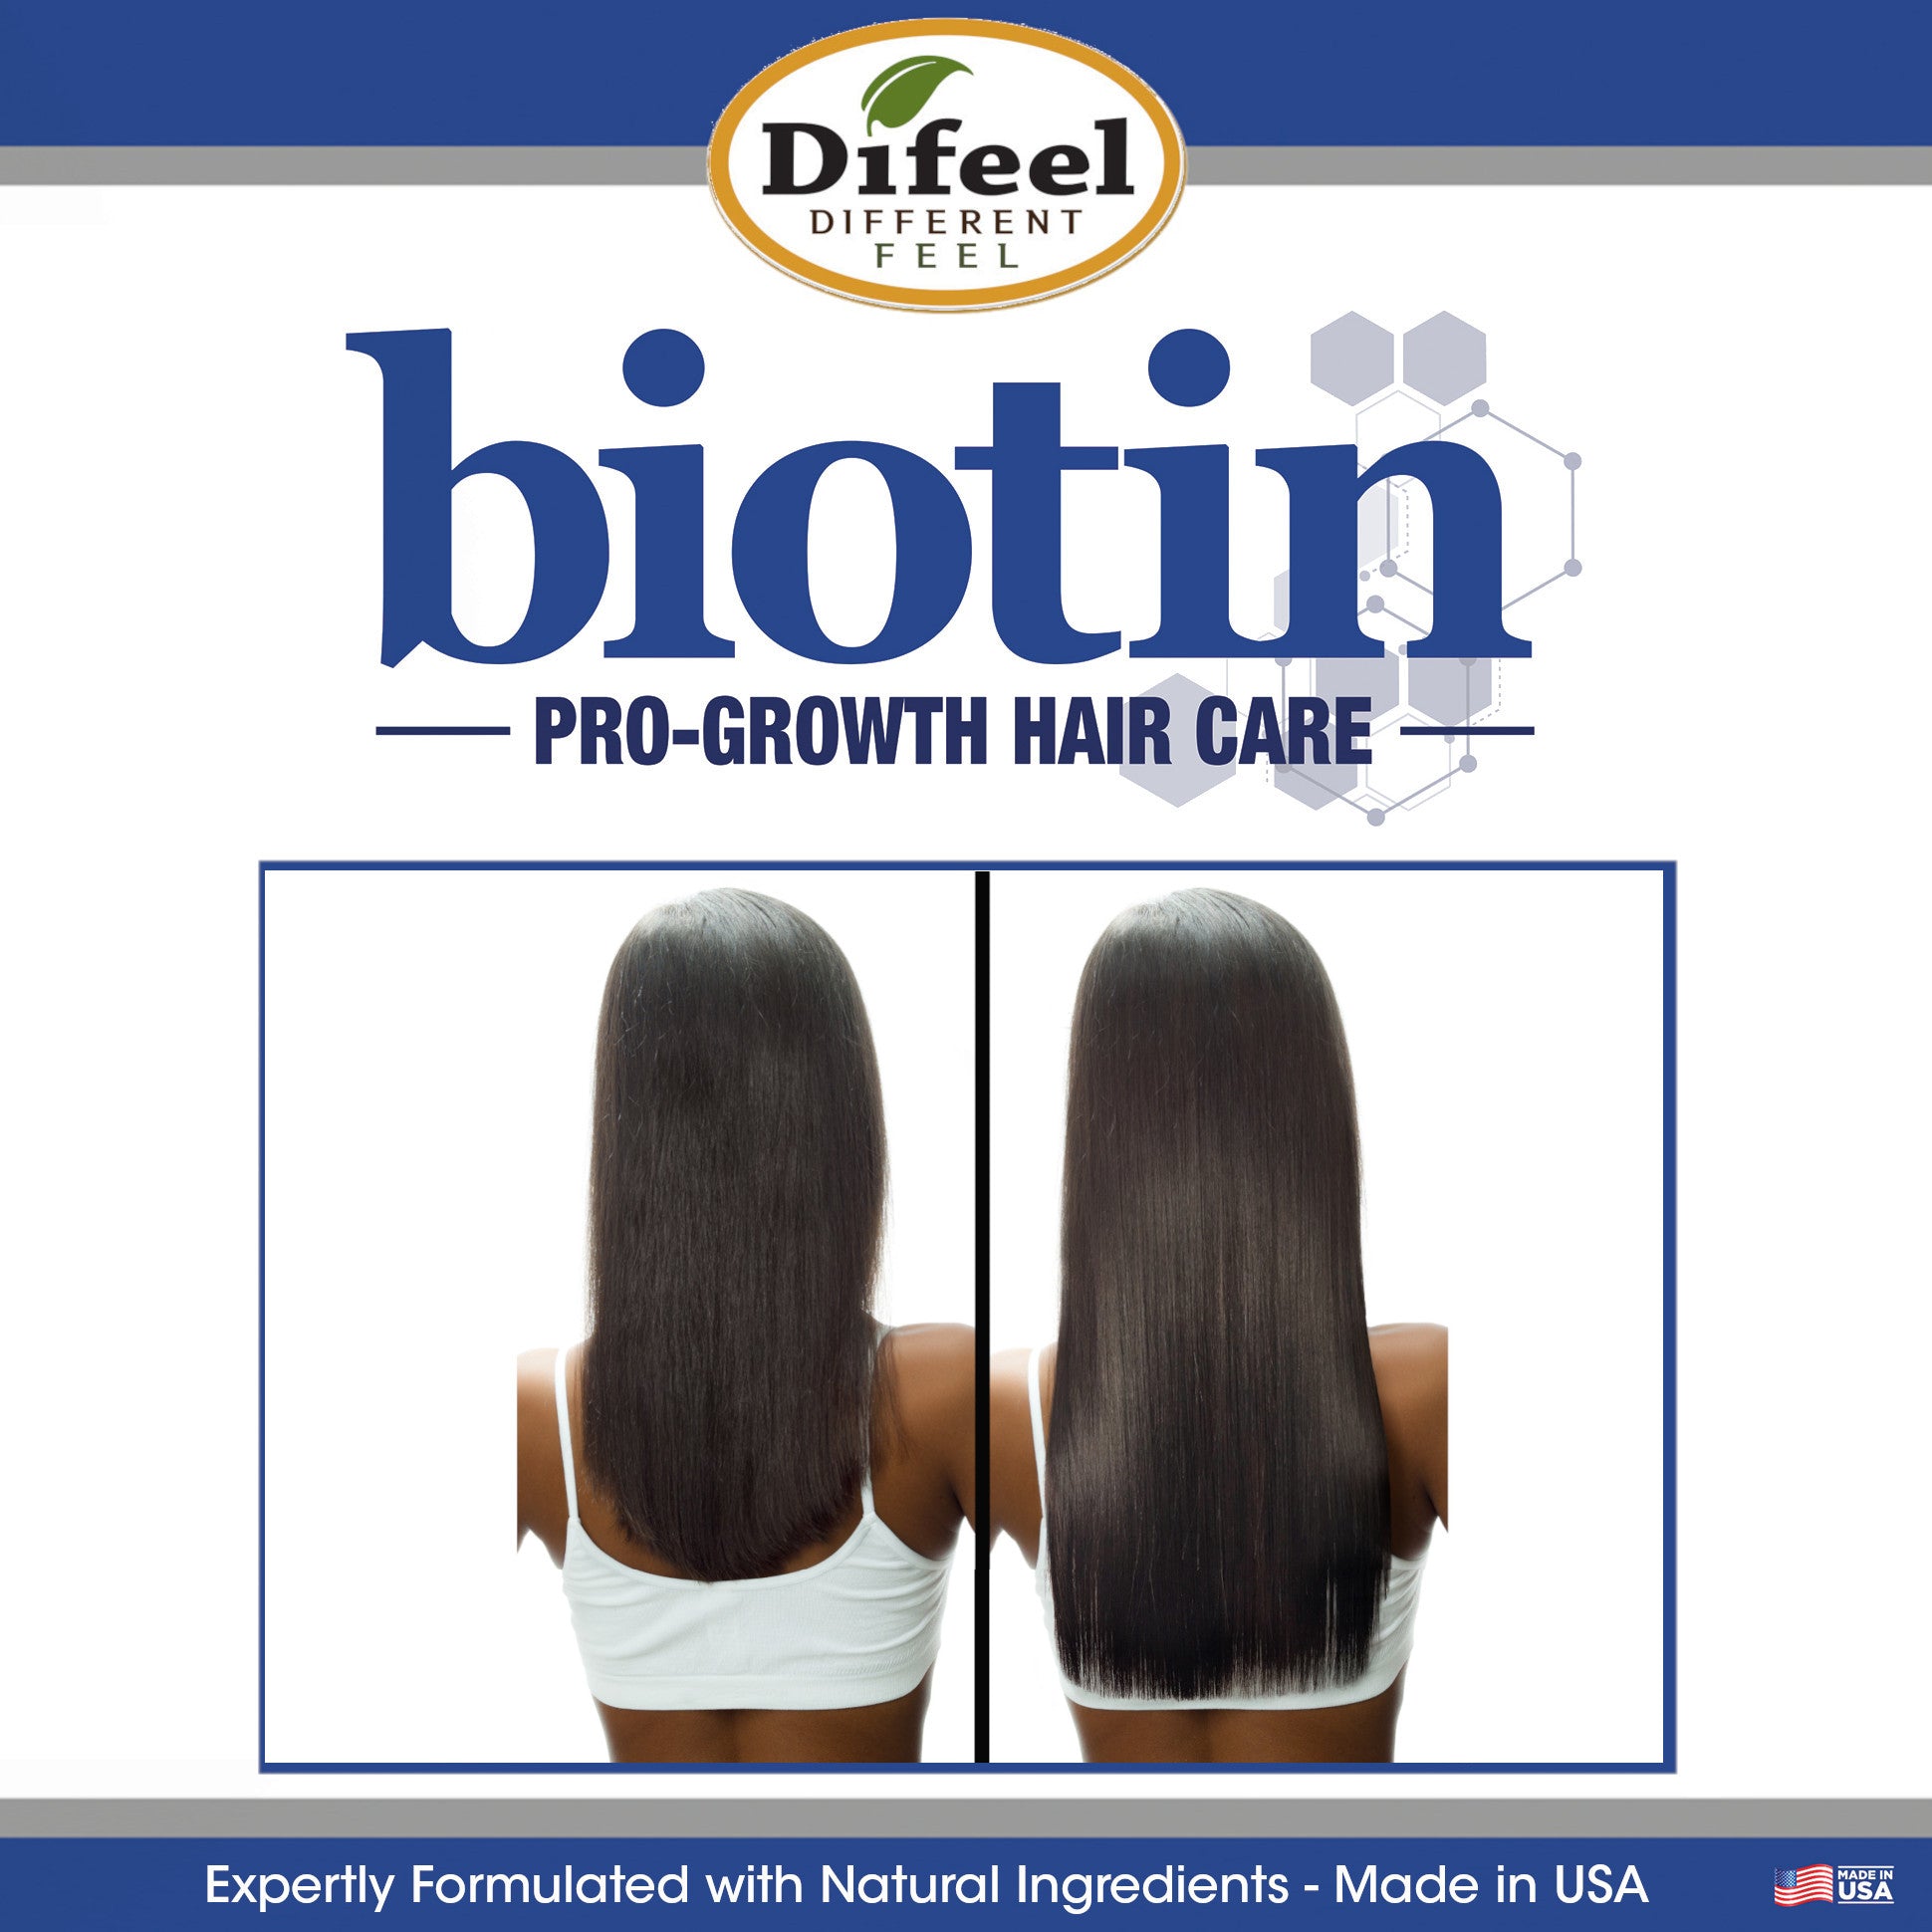 Difeel Biotin Pro-Growth Hair Mask 12 oz. (PACK OF 2)